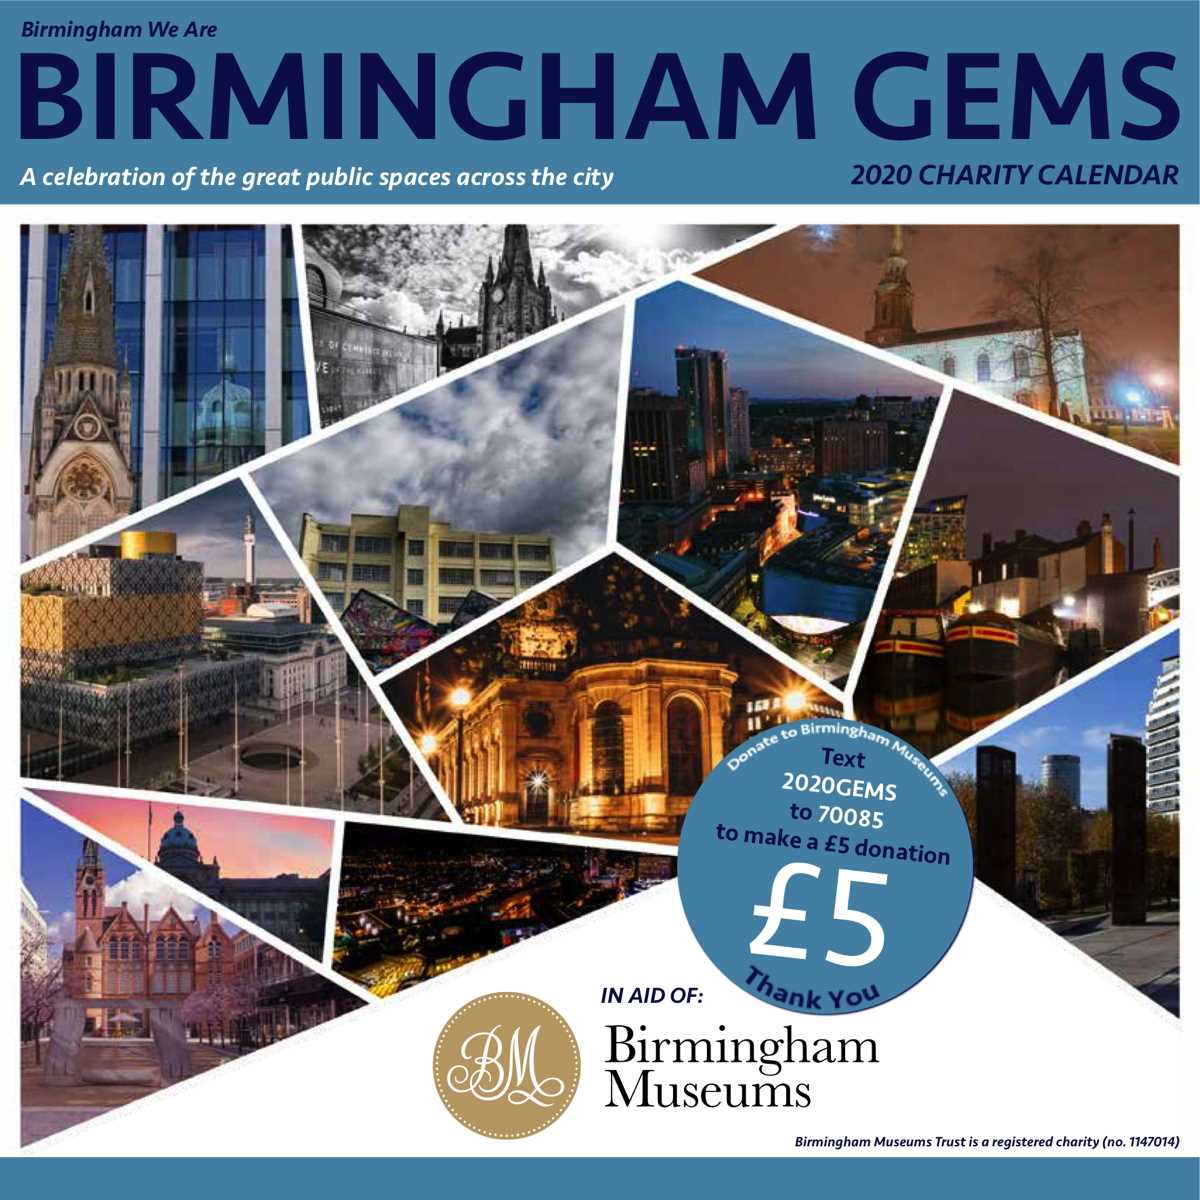 Birmingham Gems 2020 Calendar - As a sponsor add your brand to this amazing showcase of Birmingham Culture!